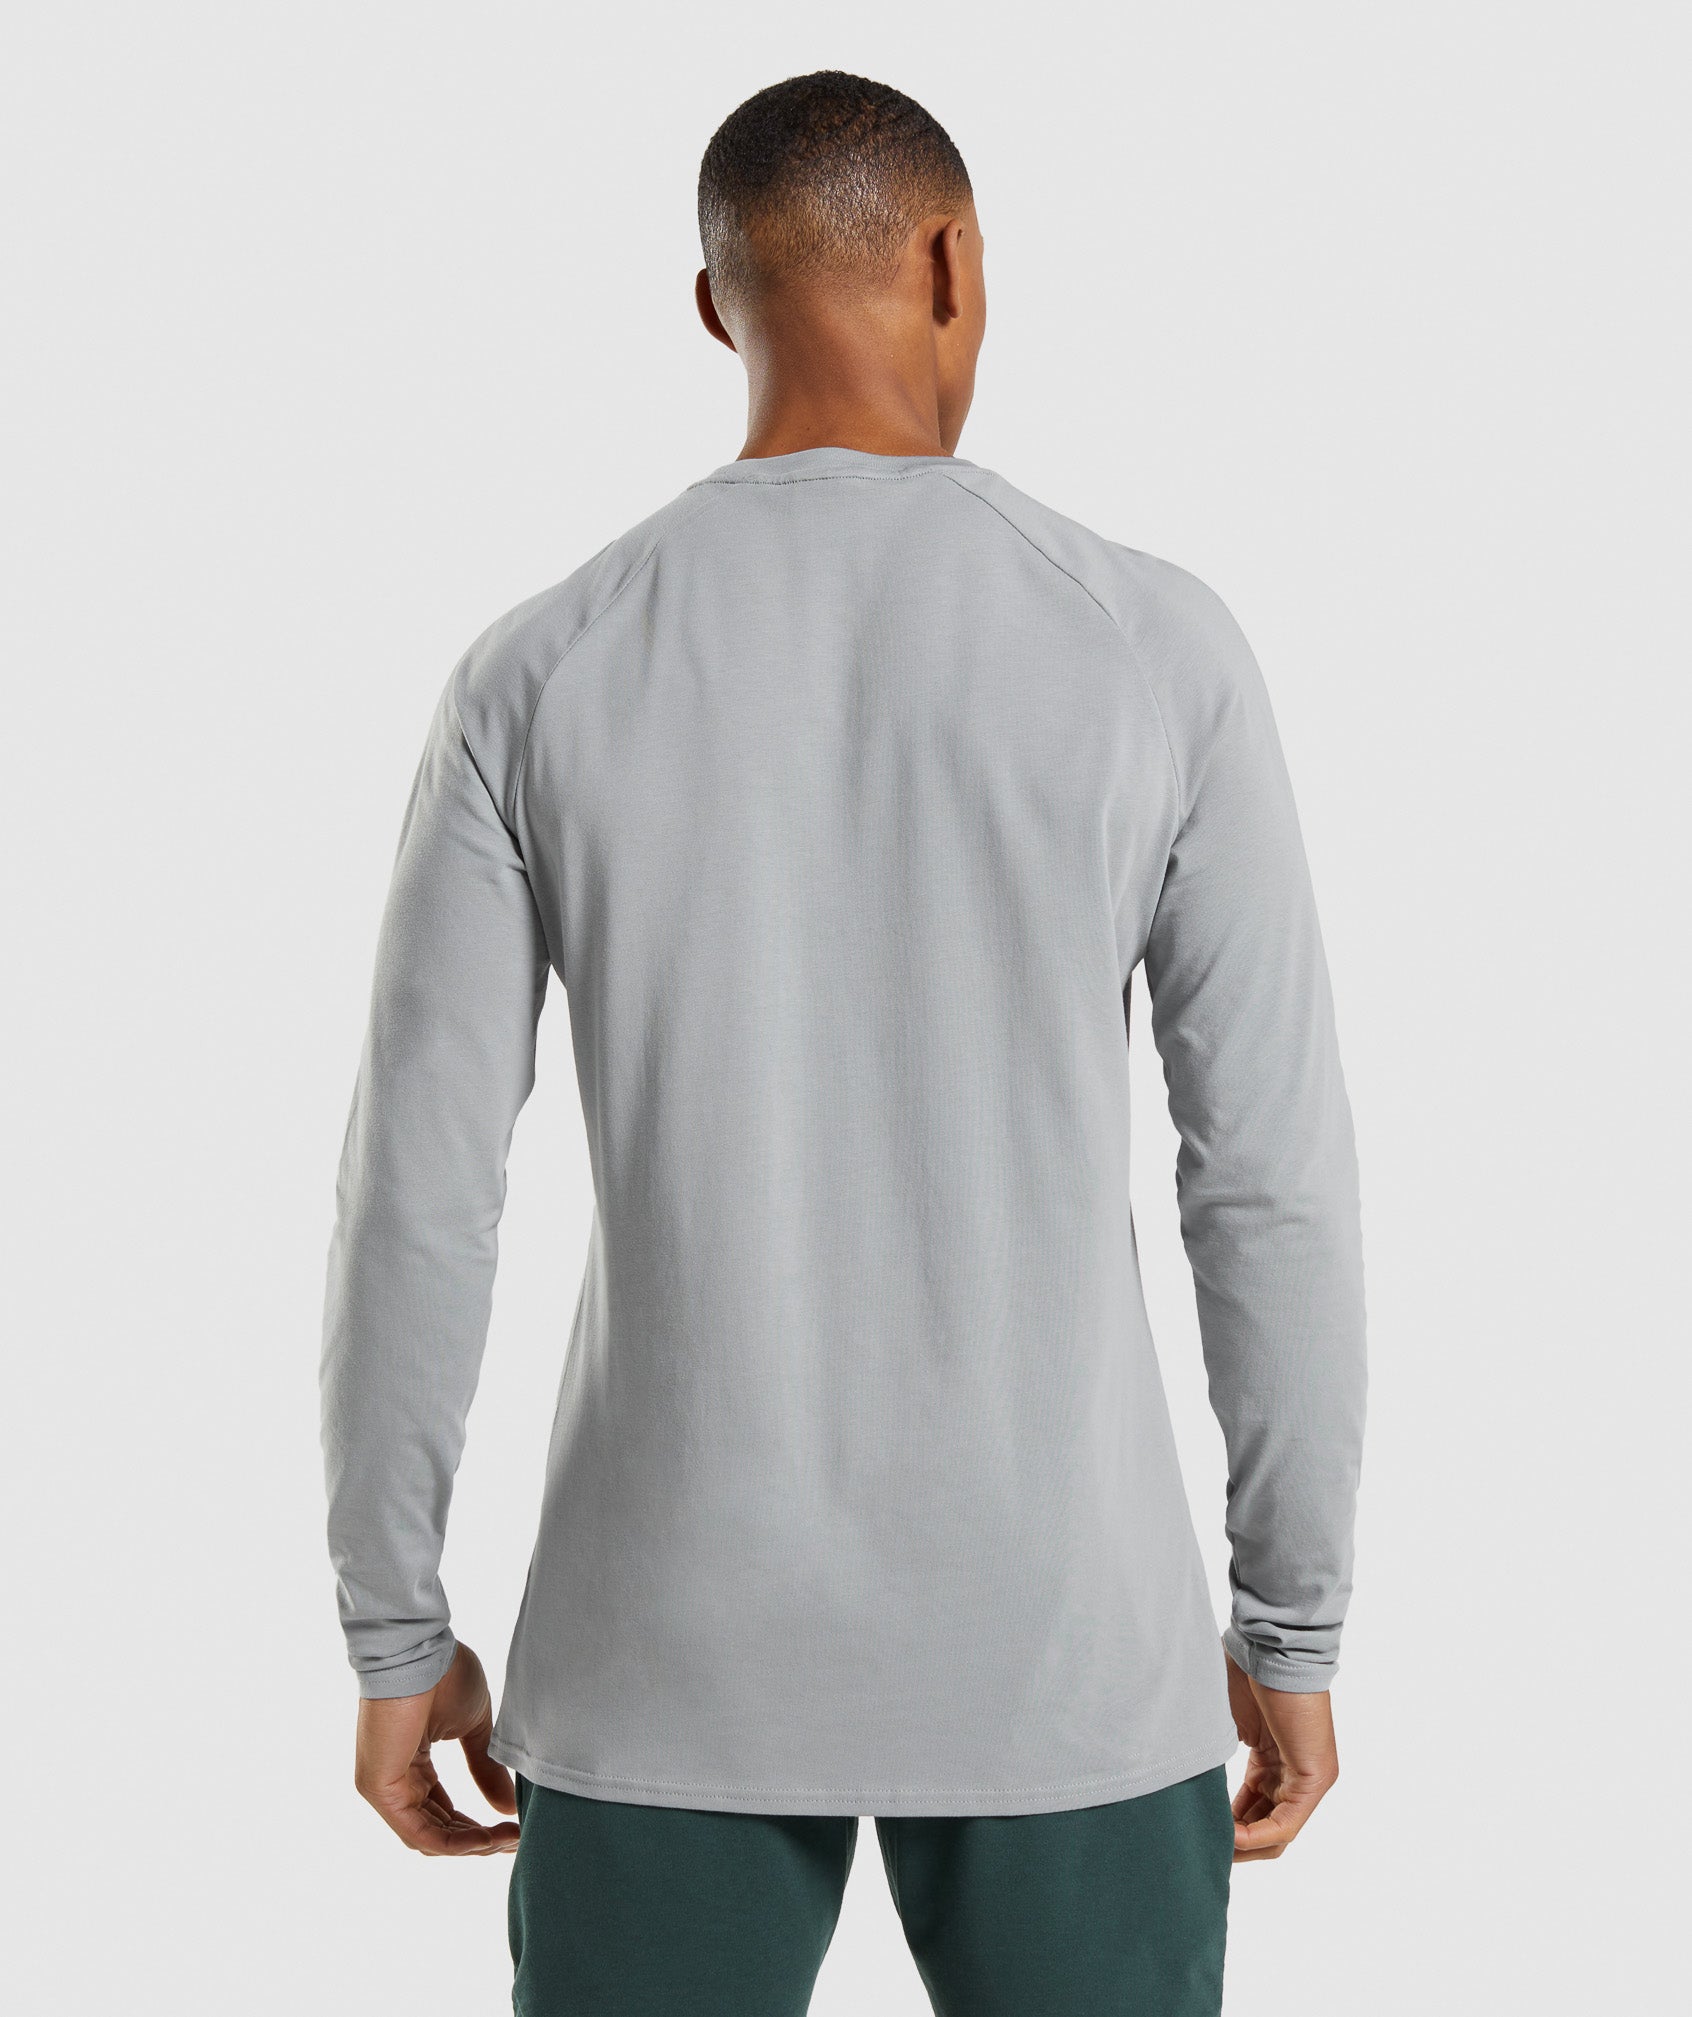 Apollo Long Sleeve T-Shirt in Smokey Grey - view 2